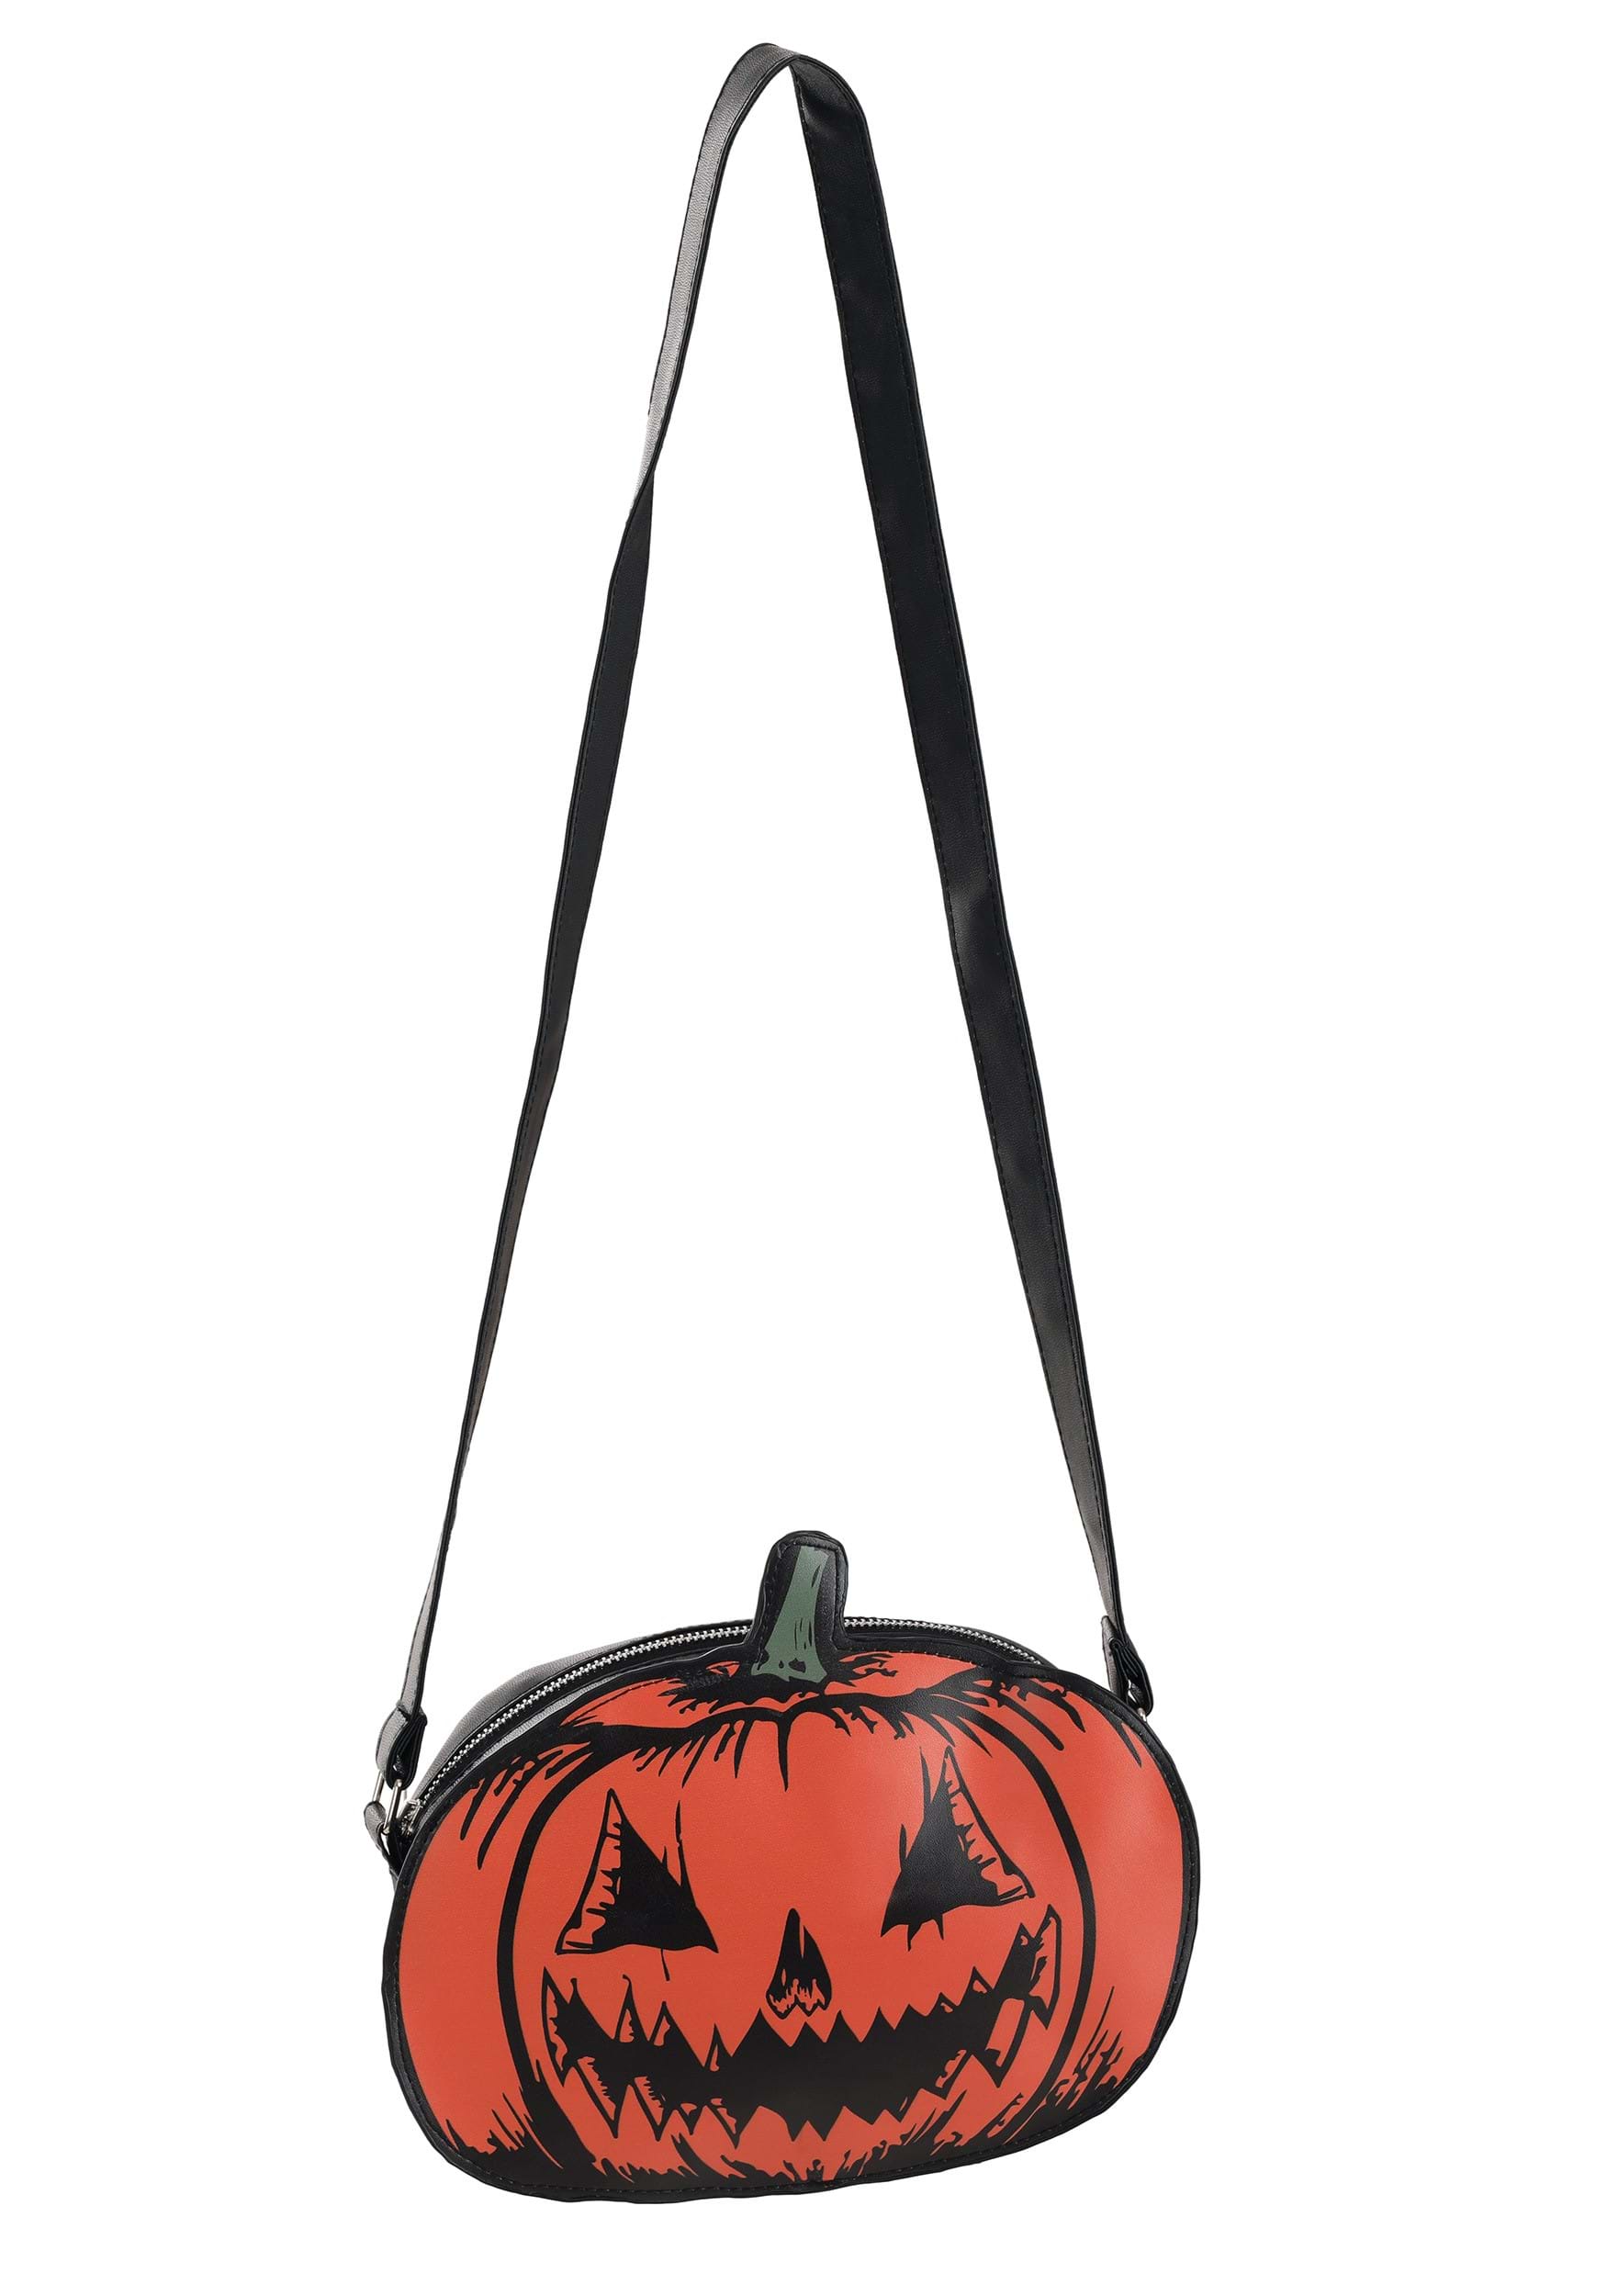 Glow In The Dark Jack O'Lantern Pumpkin Handbag 🎃 | Horror-Shop.com